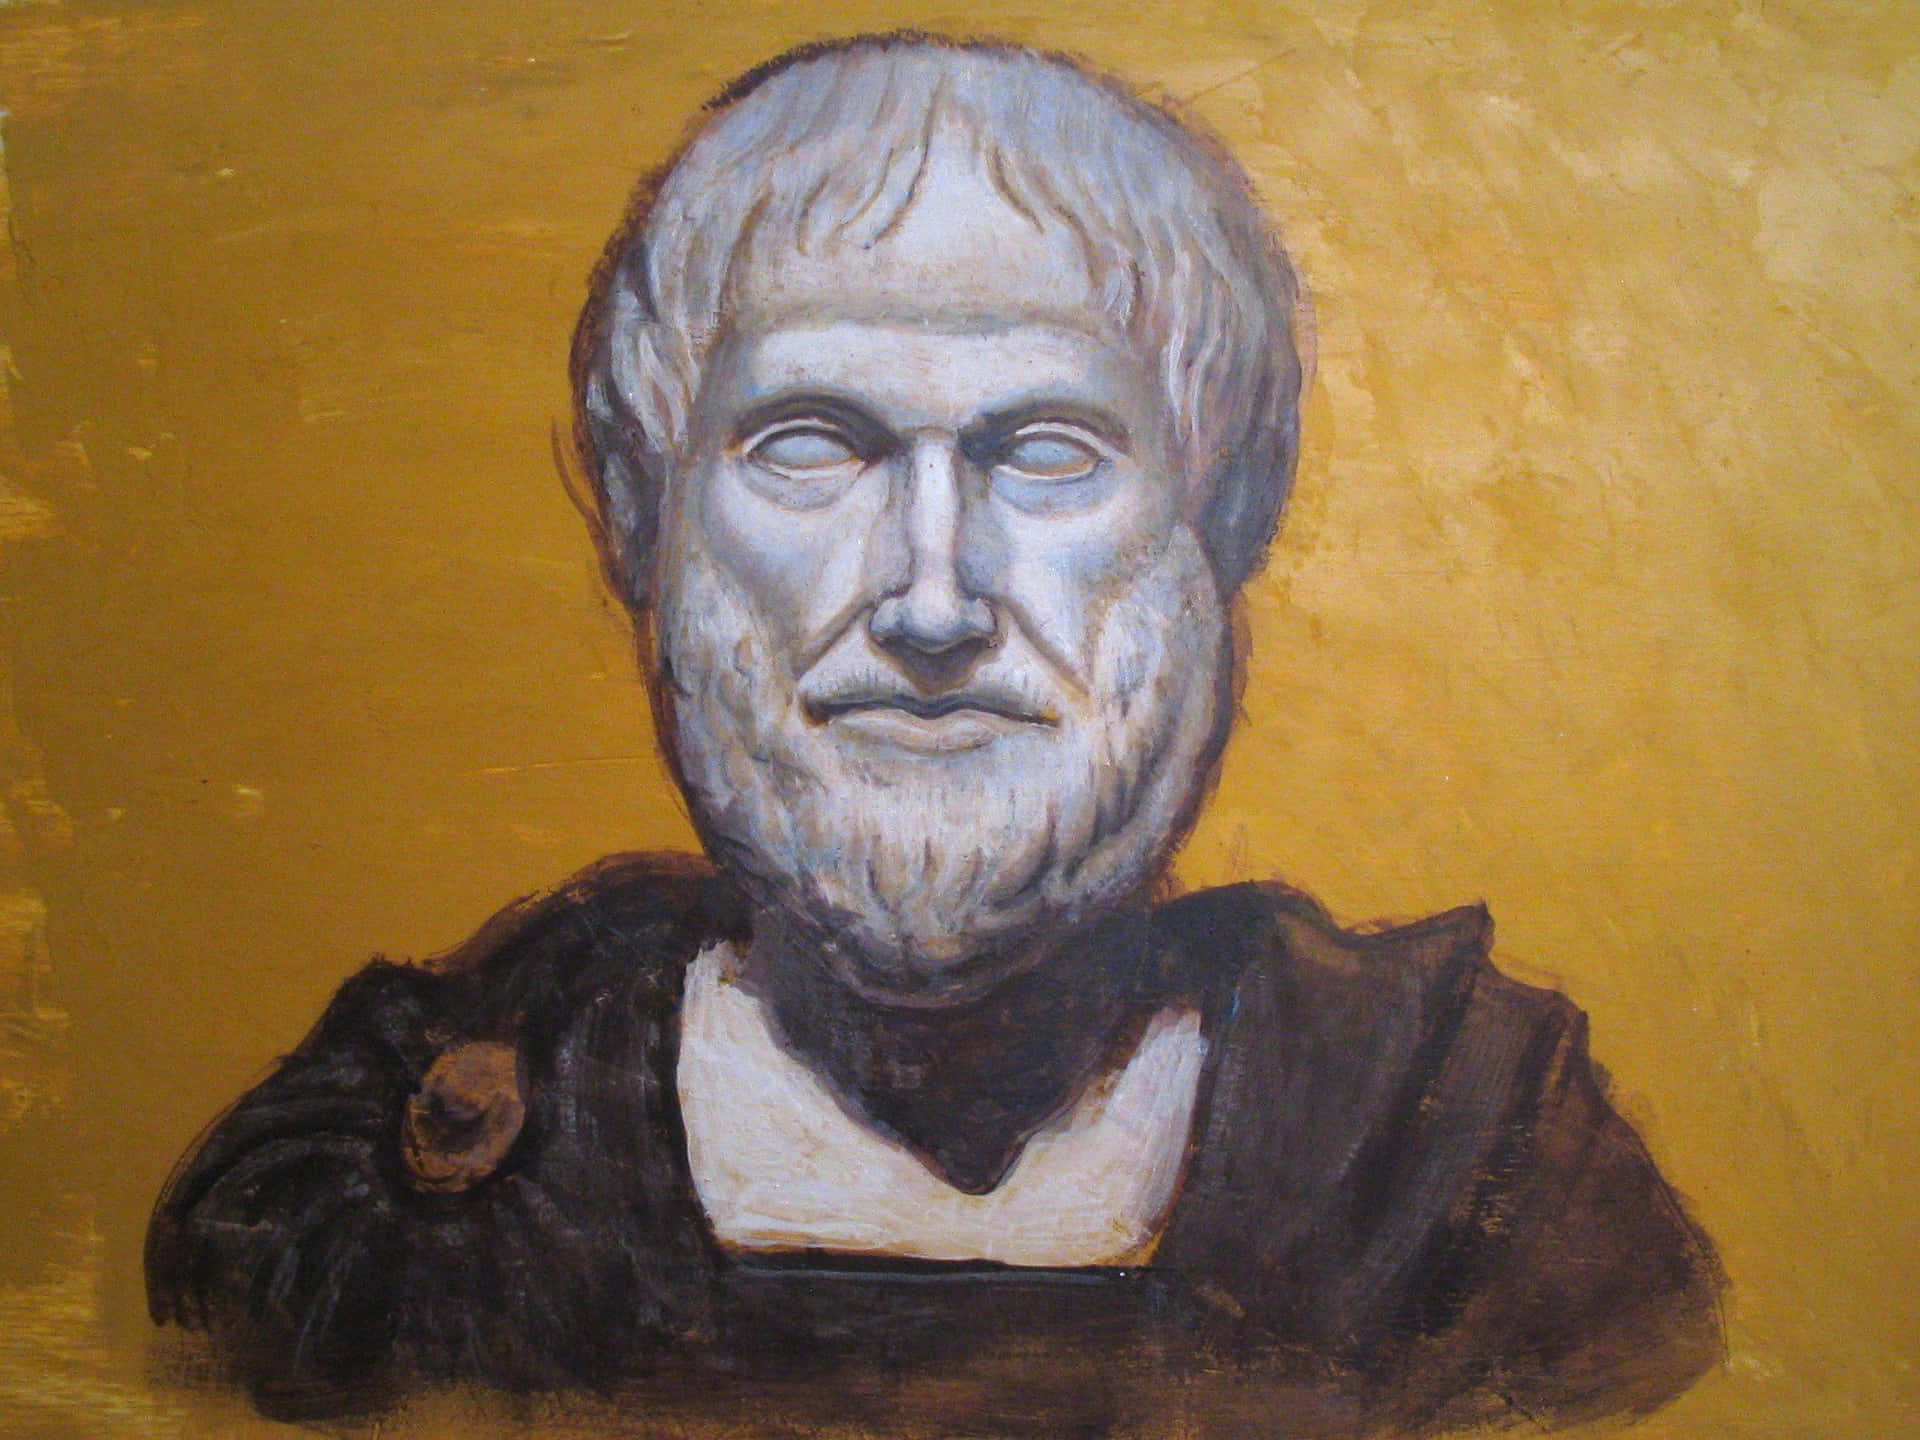 Aristotle Wallpaper